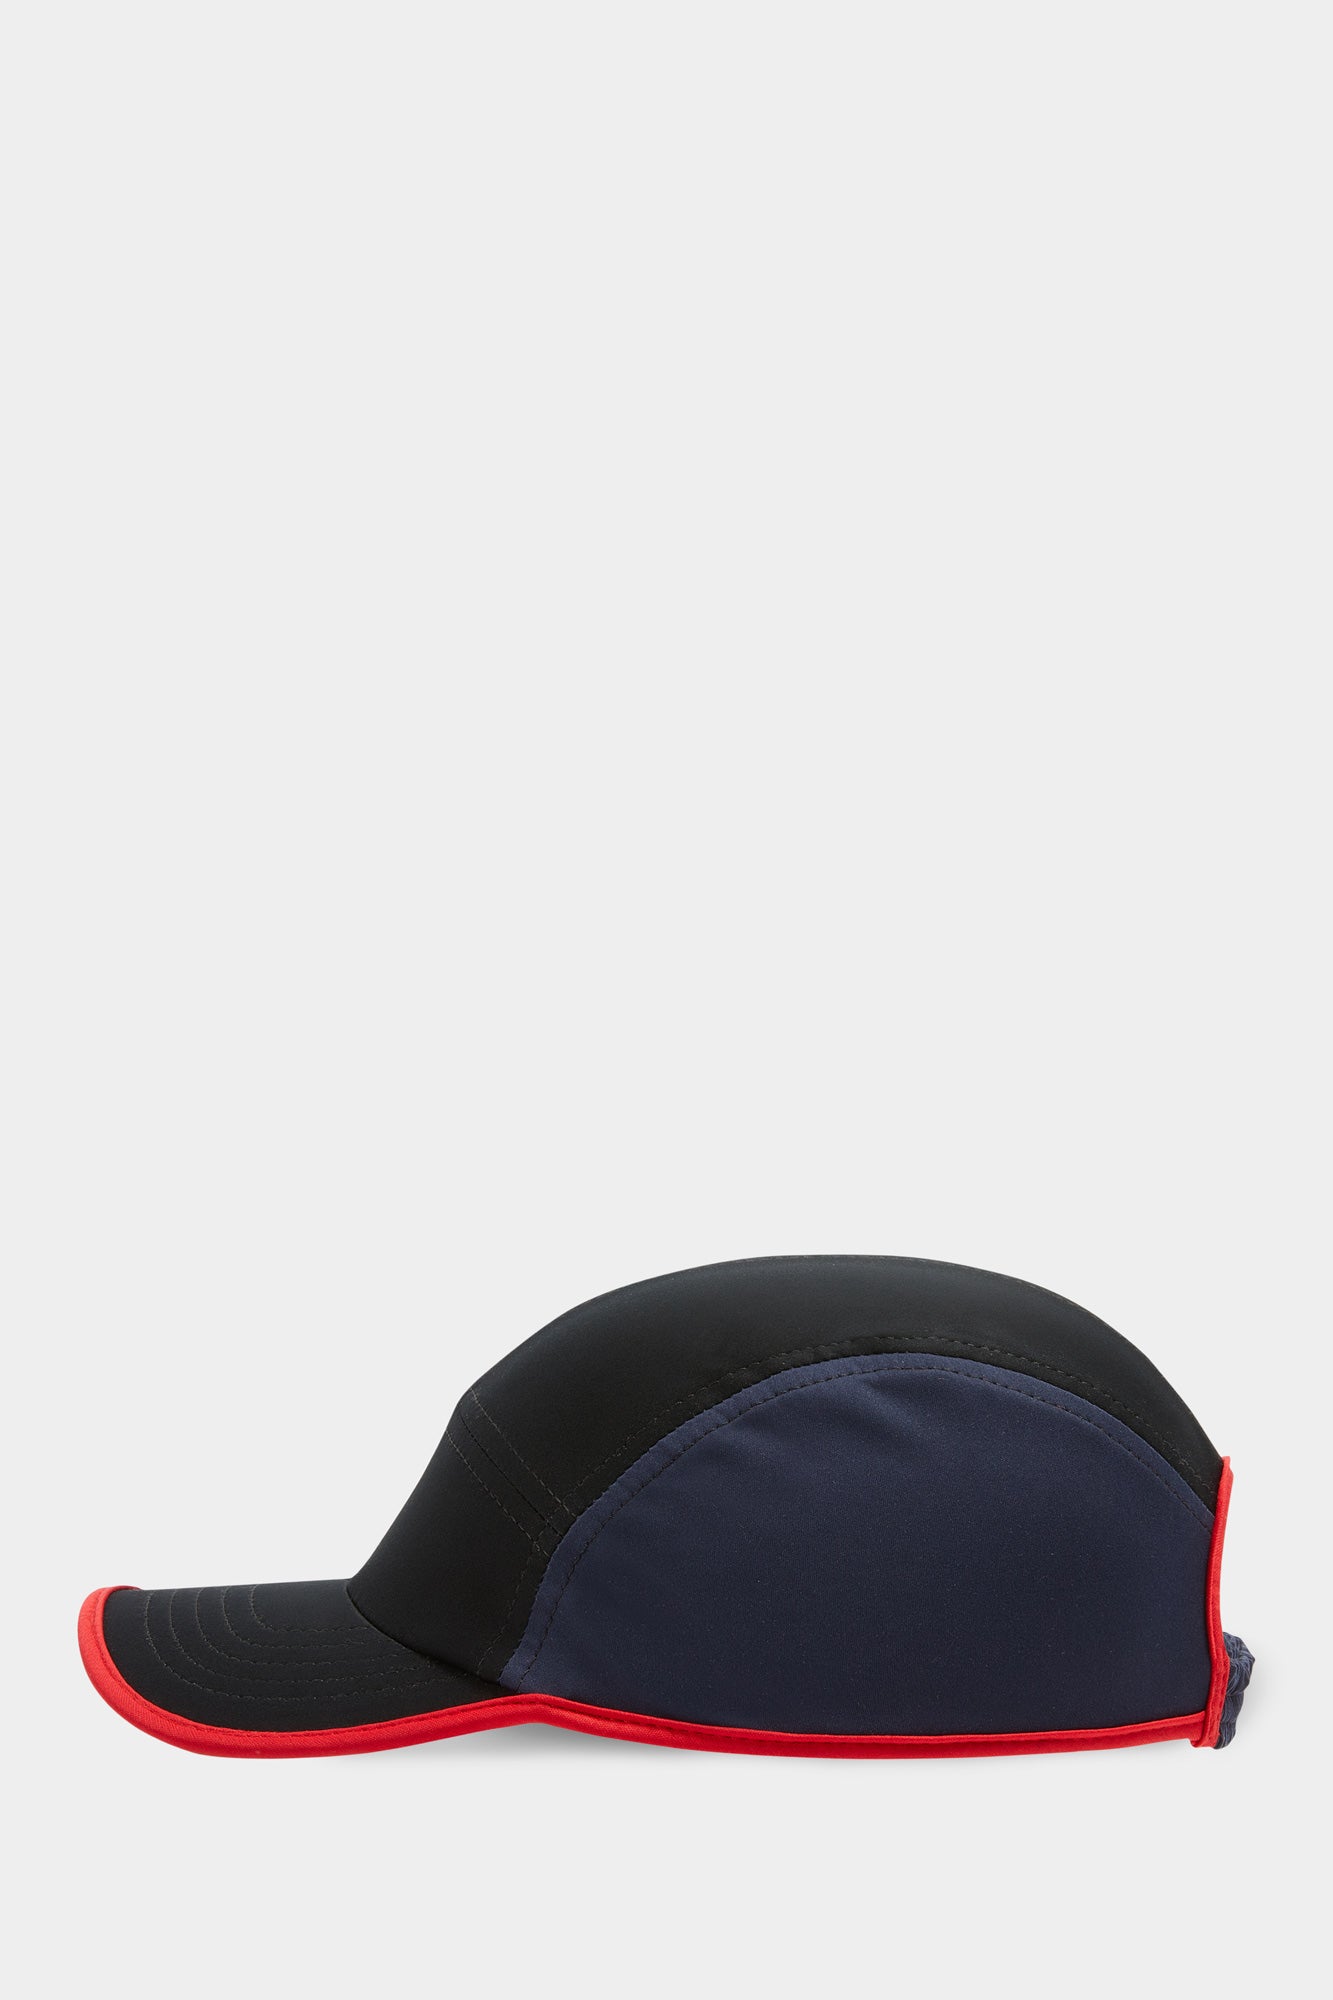 BASEBALL CAP / black, blue & red